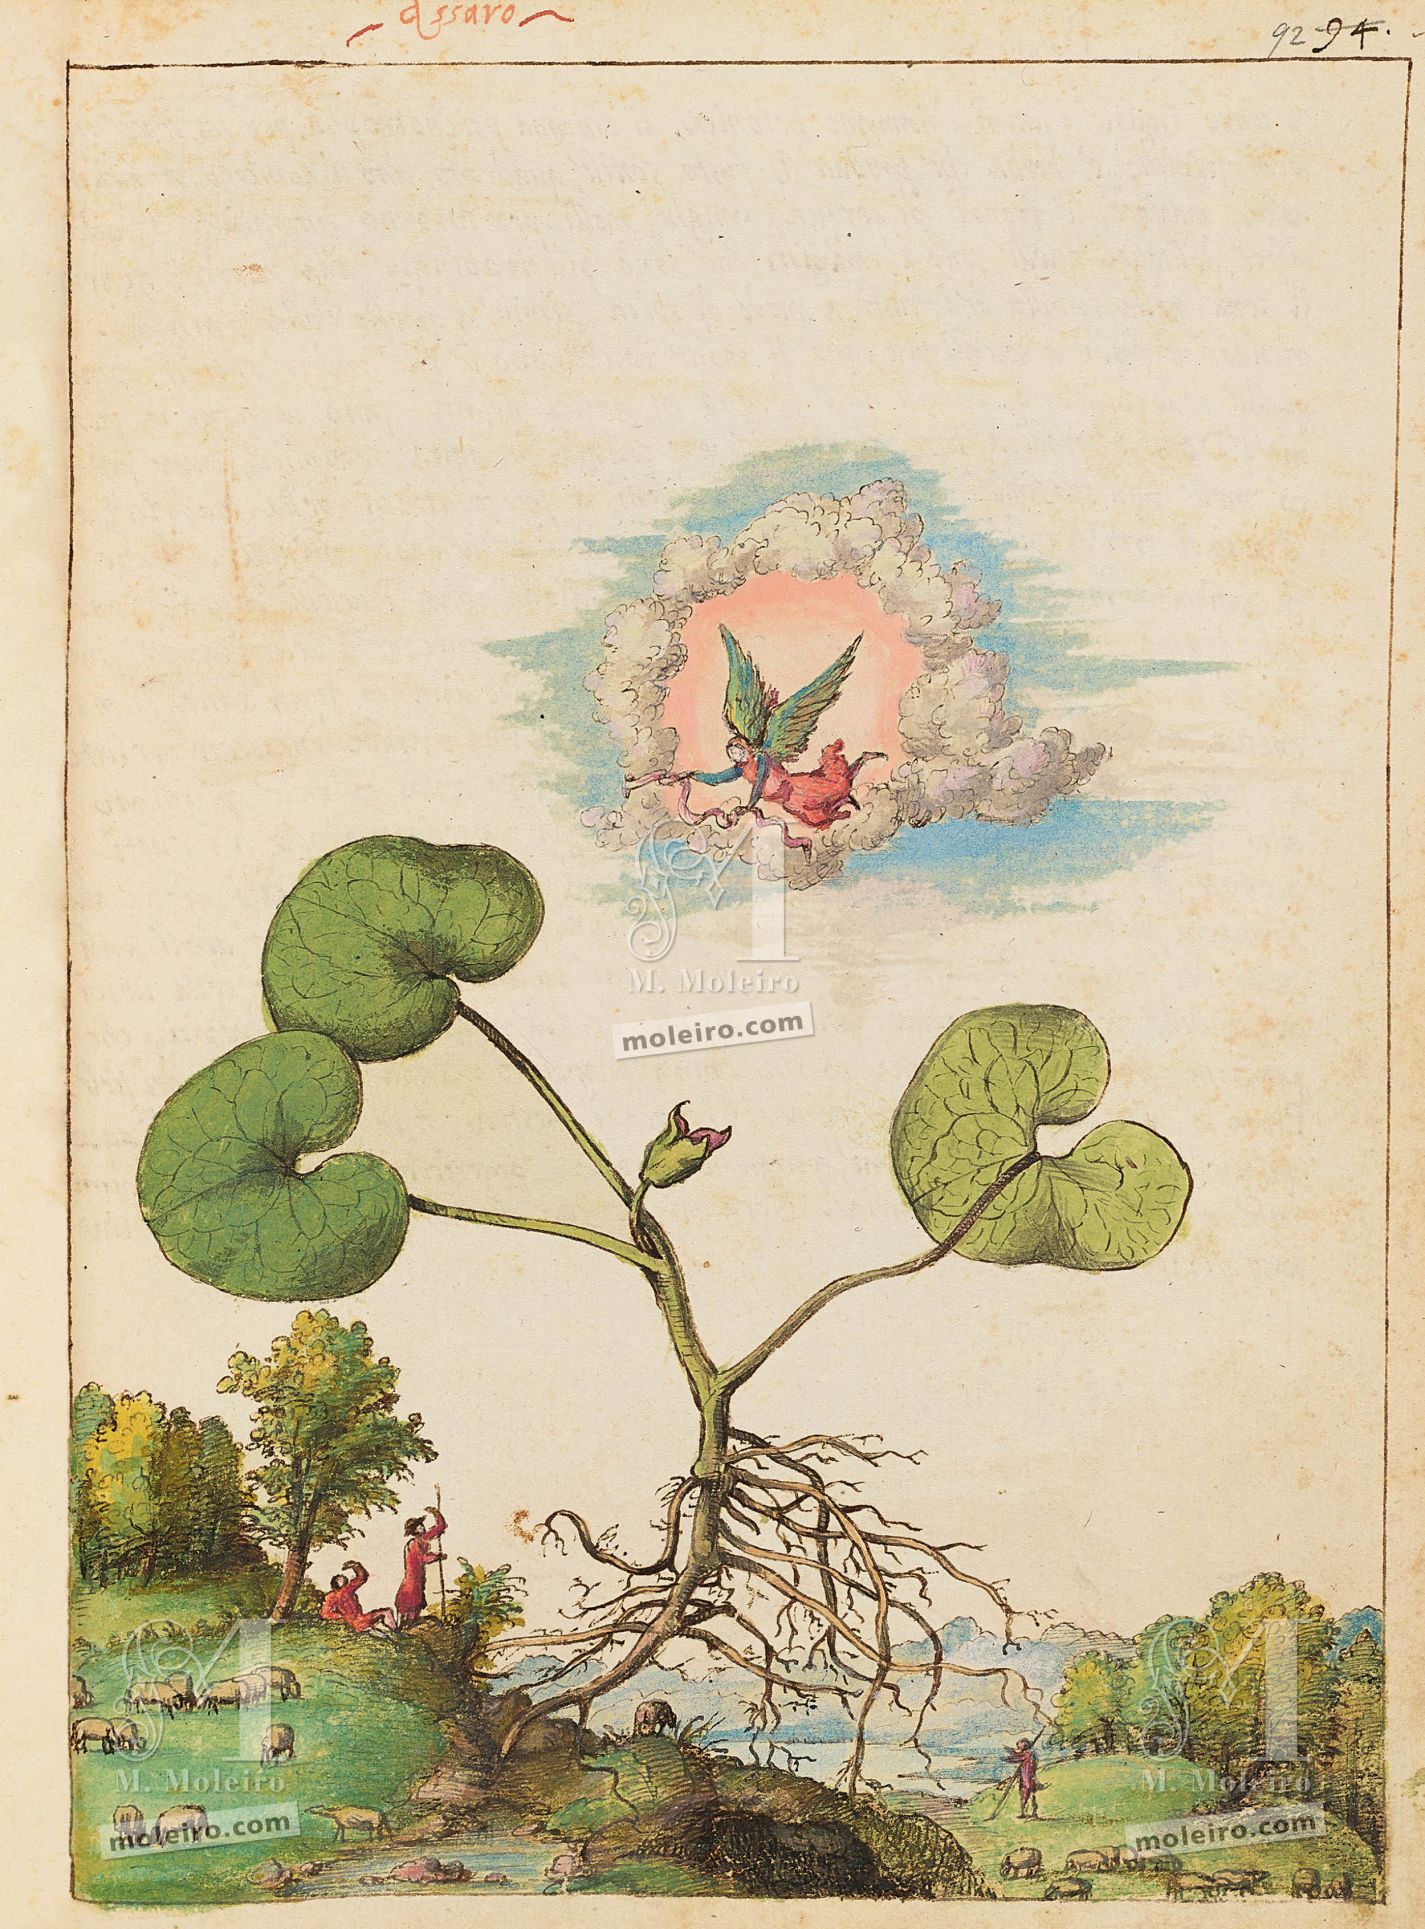 Hierba tabernera (Asarum europaeum L.), f. 92r